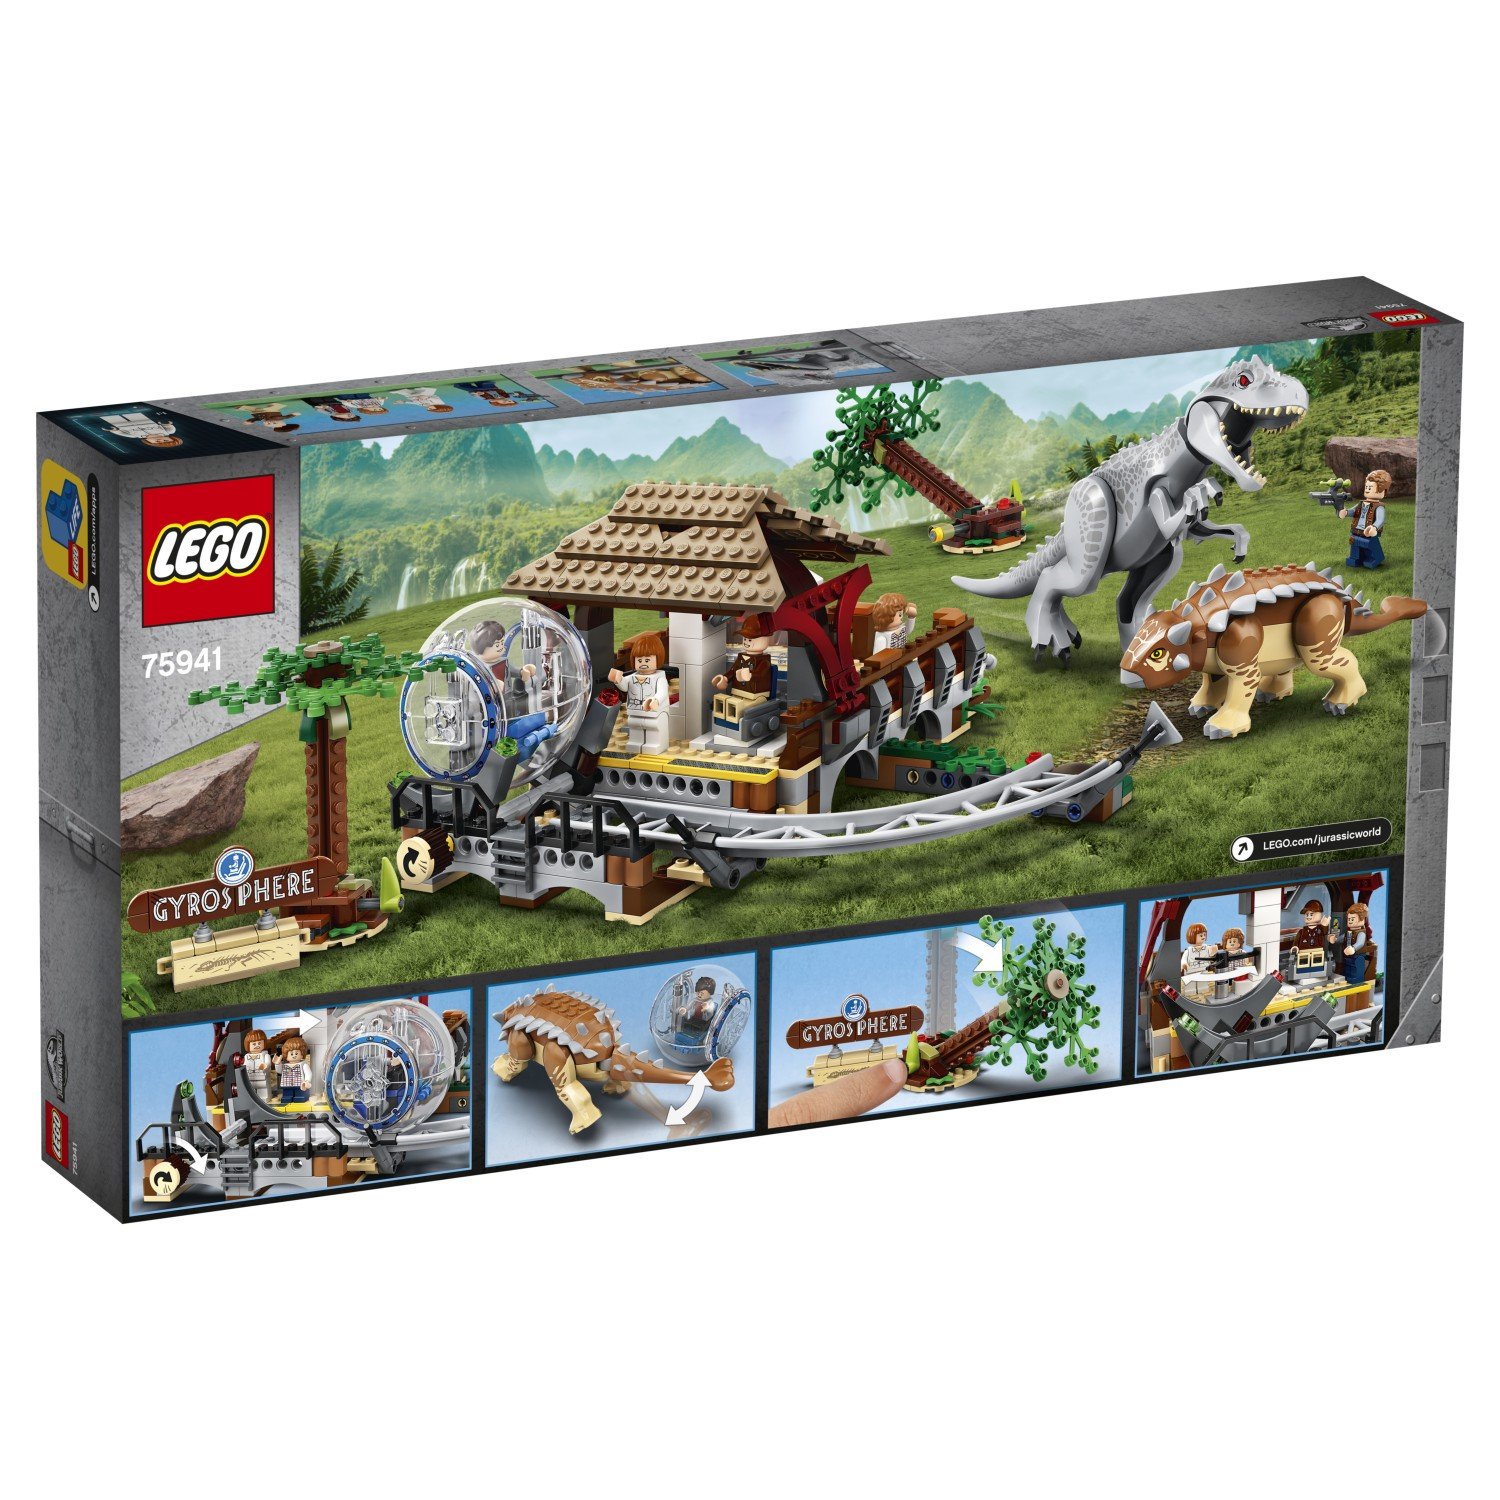 Lego Jurassic World 75941 Индоминус-рекс против анкилозавра